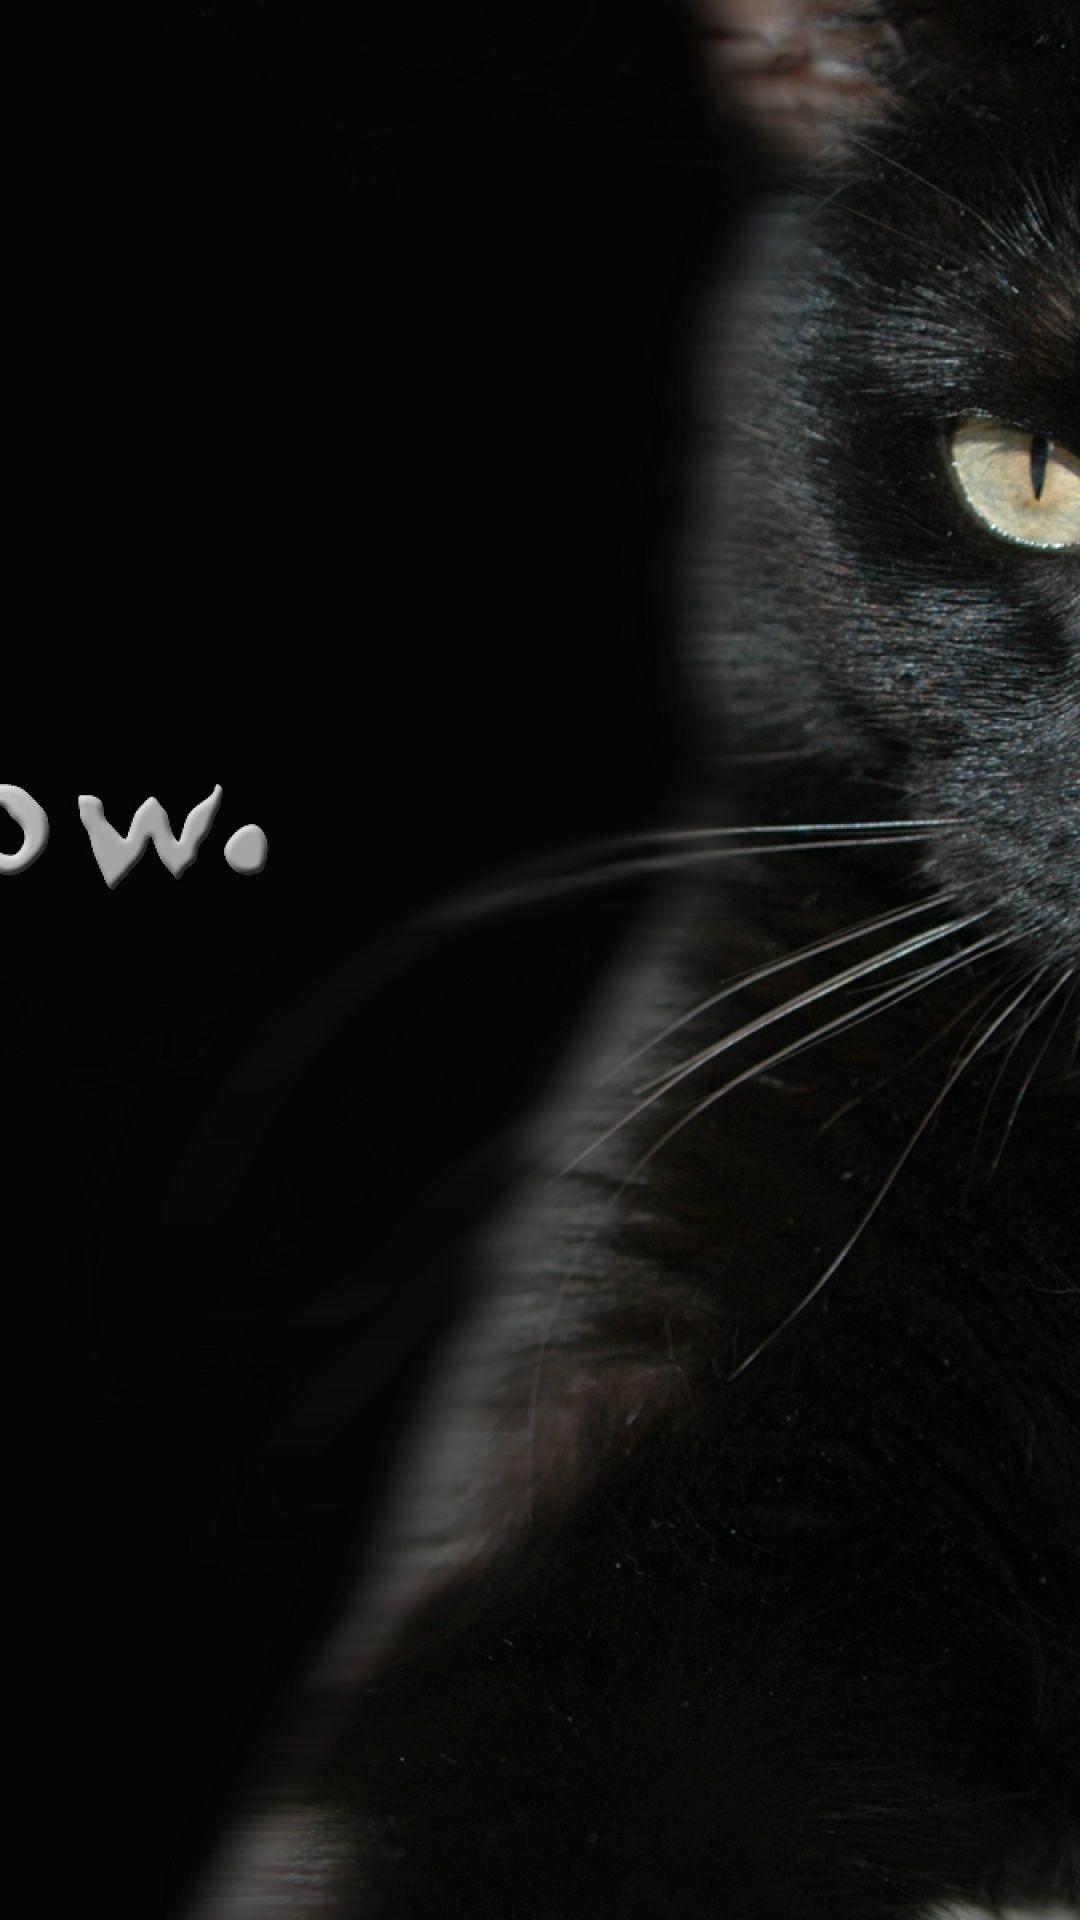 Aesthetic Black Cat Wallpapers - Top Free Aesthetic Black Cat